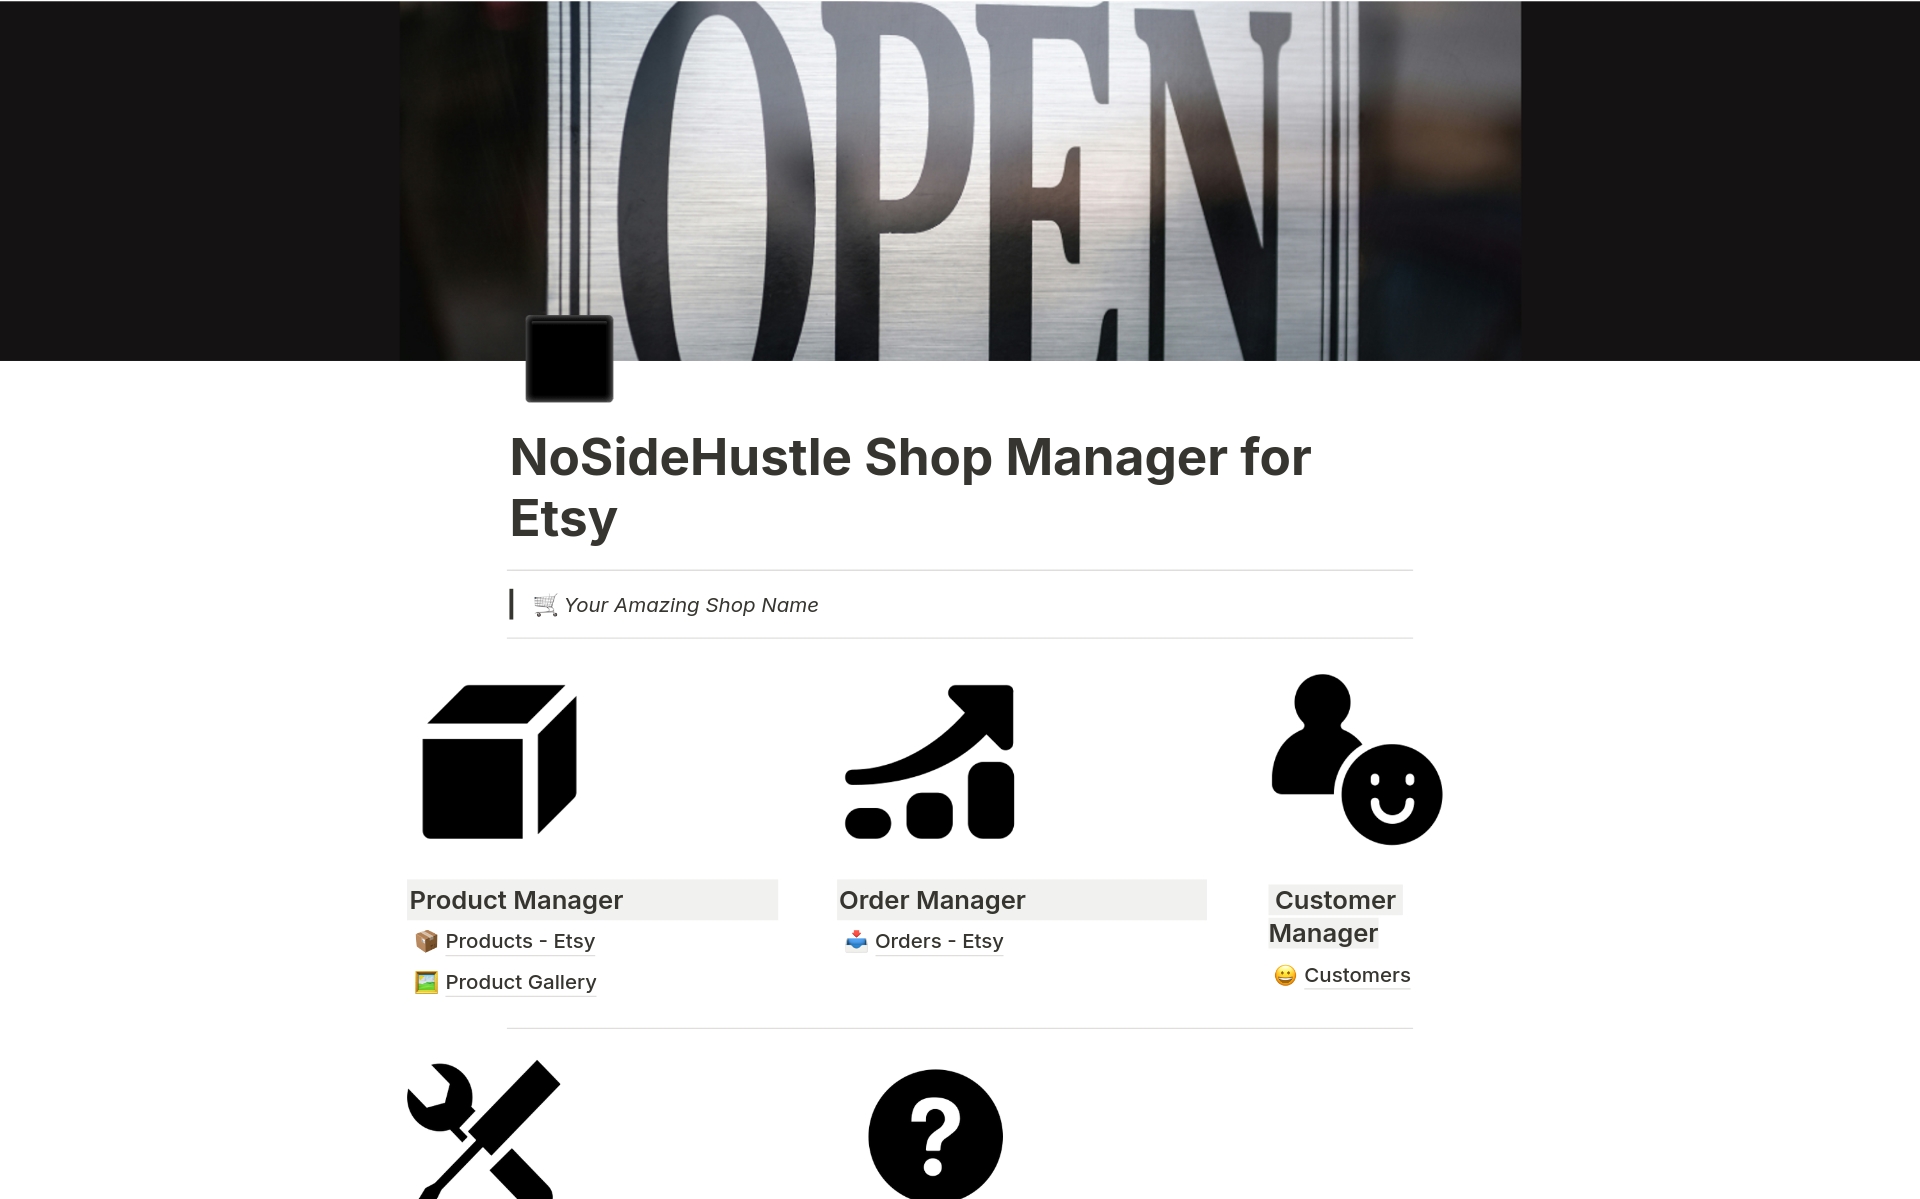 NoSideHustle Shop Manager for Etsy님의 템플릿 미리보기